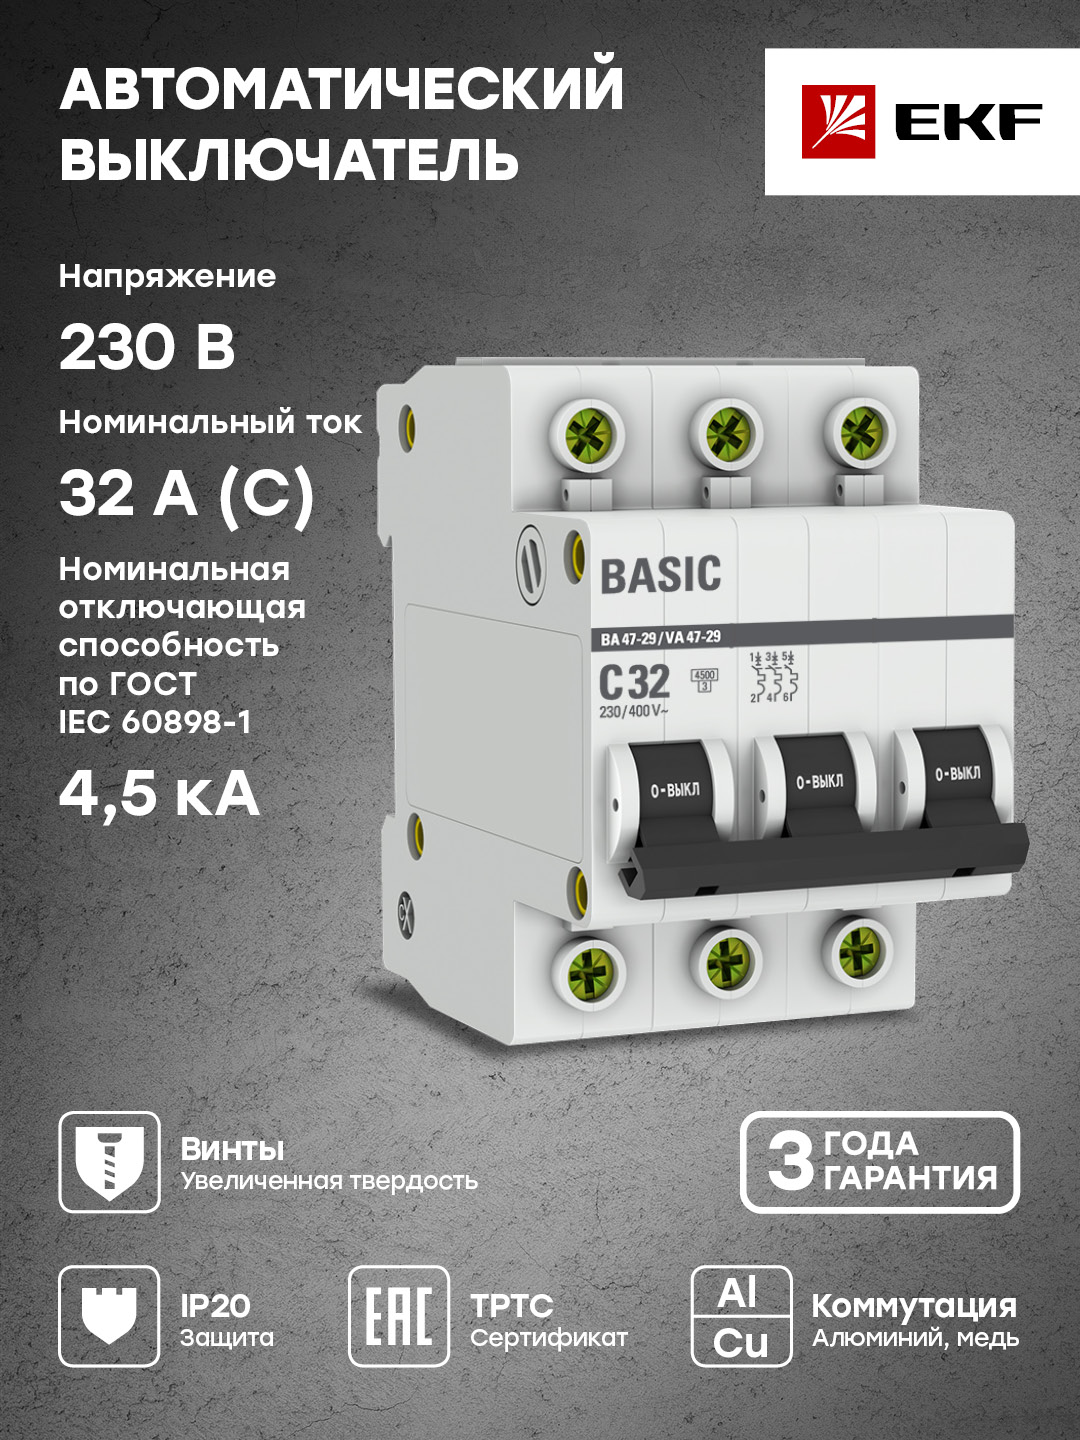 Автоматический выключатель EKF Basic 3P 32А (C) 4,5кА ВА 47-29 mcb4729-3-32C